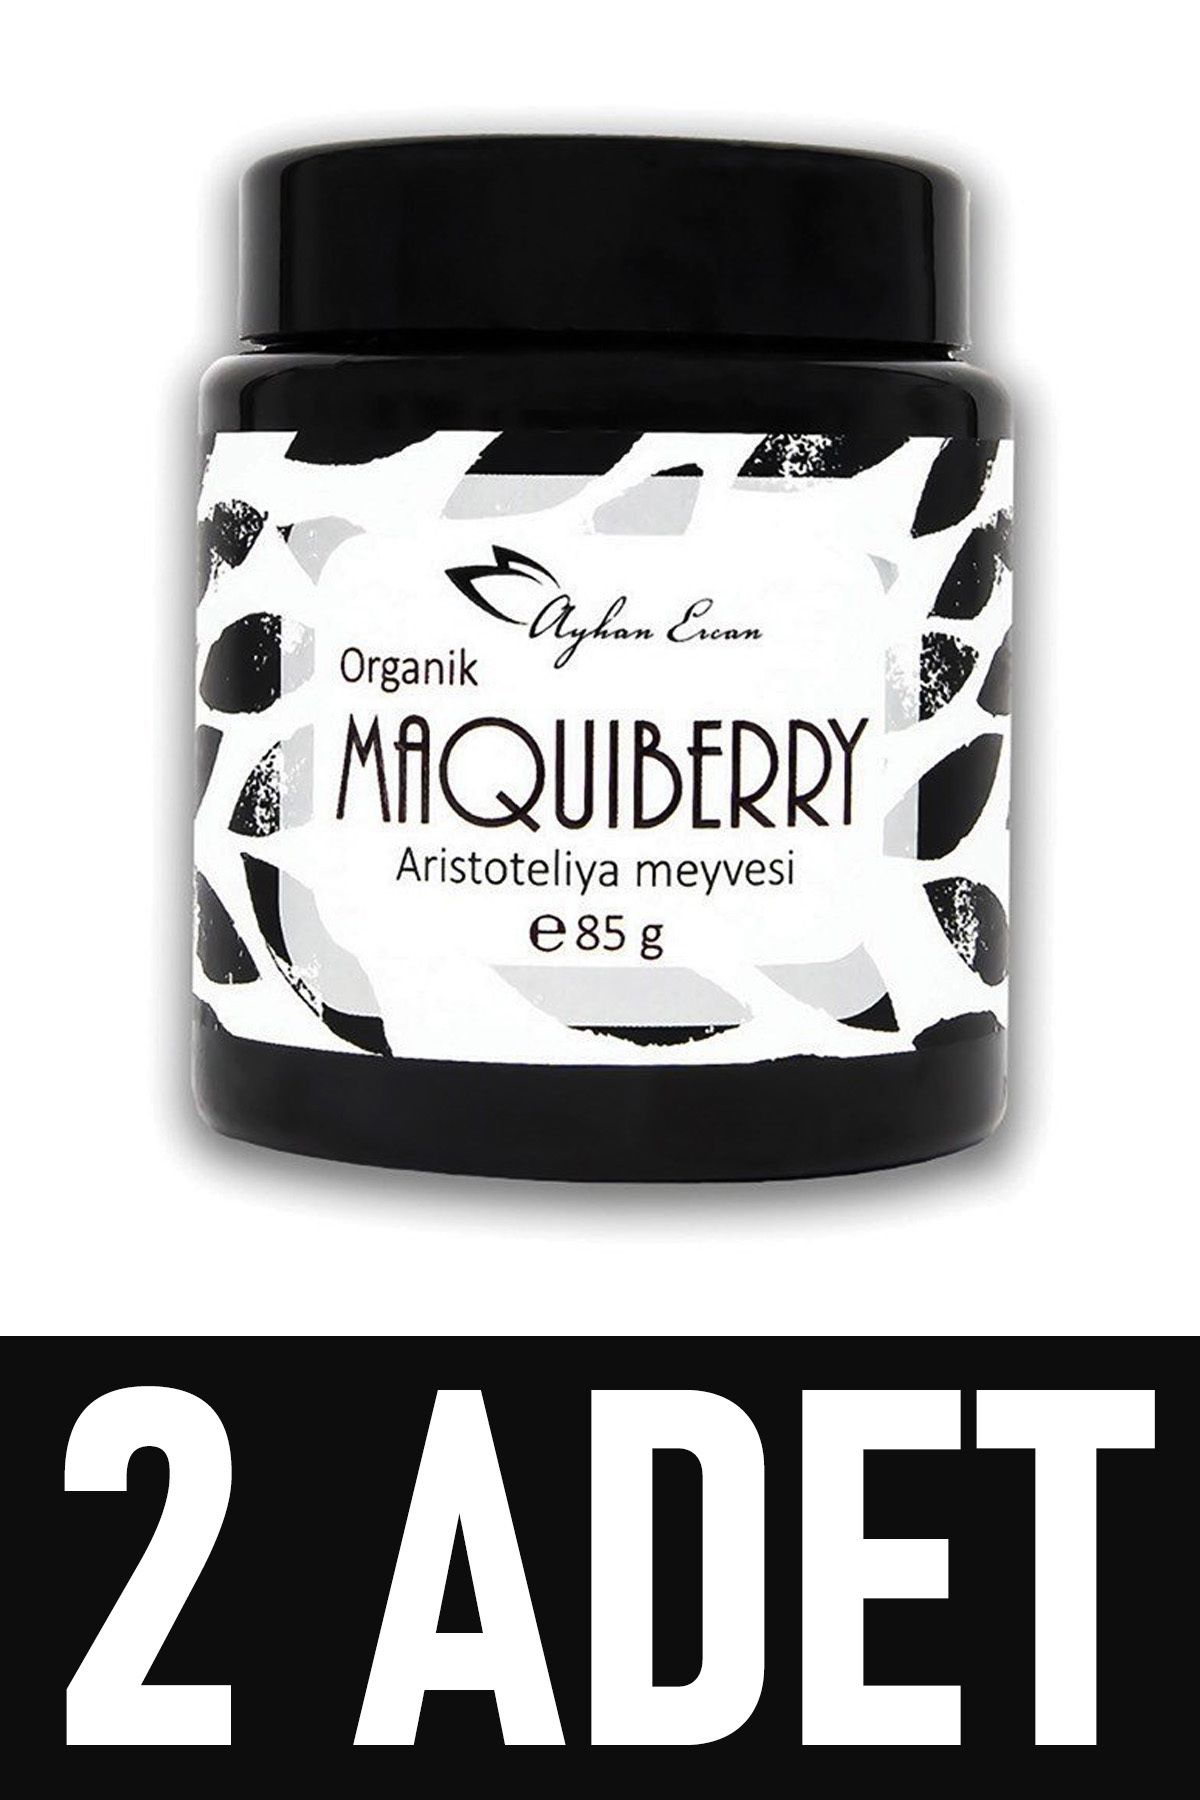 Ayhan Ercan Organik Maquiberry Meyvesi Tozu 85 gr (2 Adet)